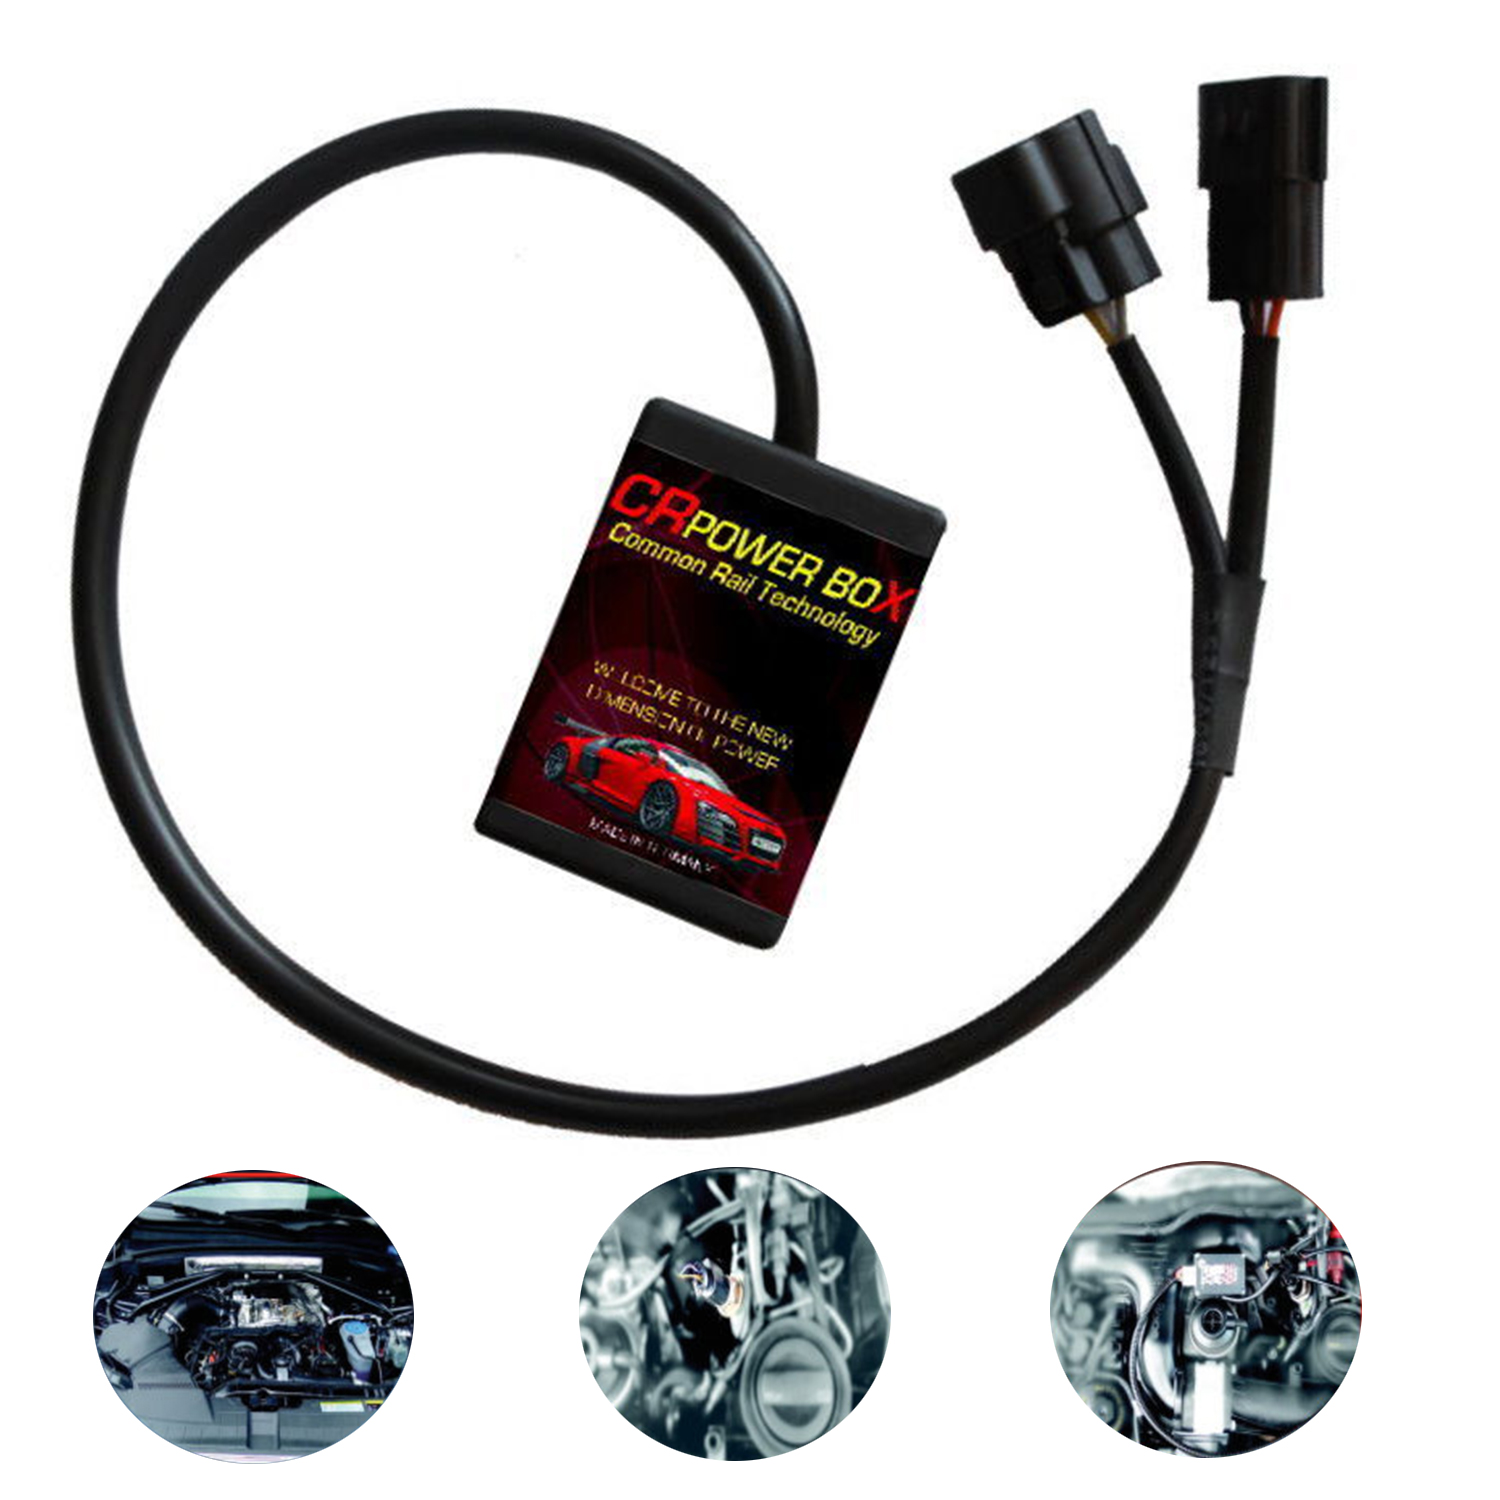 Diesel CD MZ CD Common Power Box Chip Tuning für Mazda CX-3 CX-5 CX-7 MPV BT-50 von Tuning Fanatics